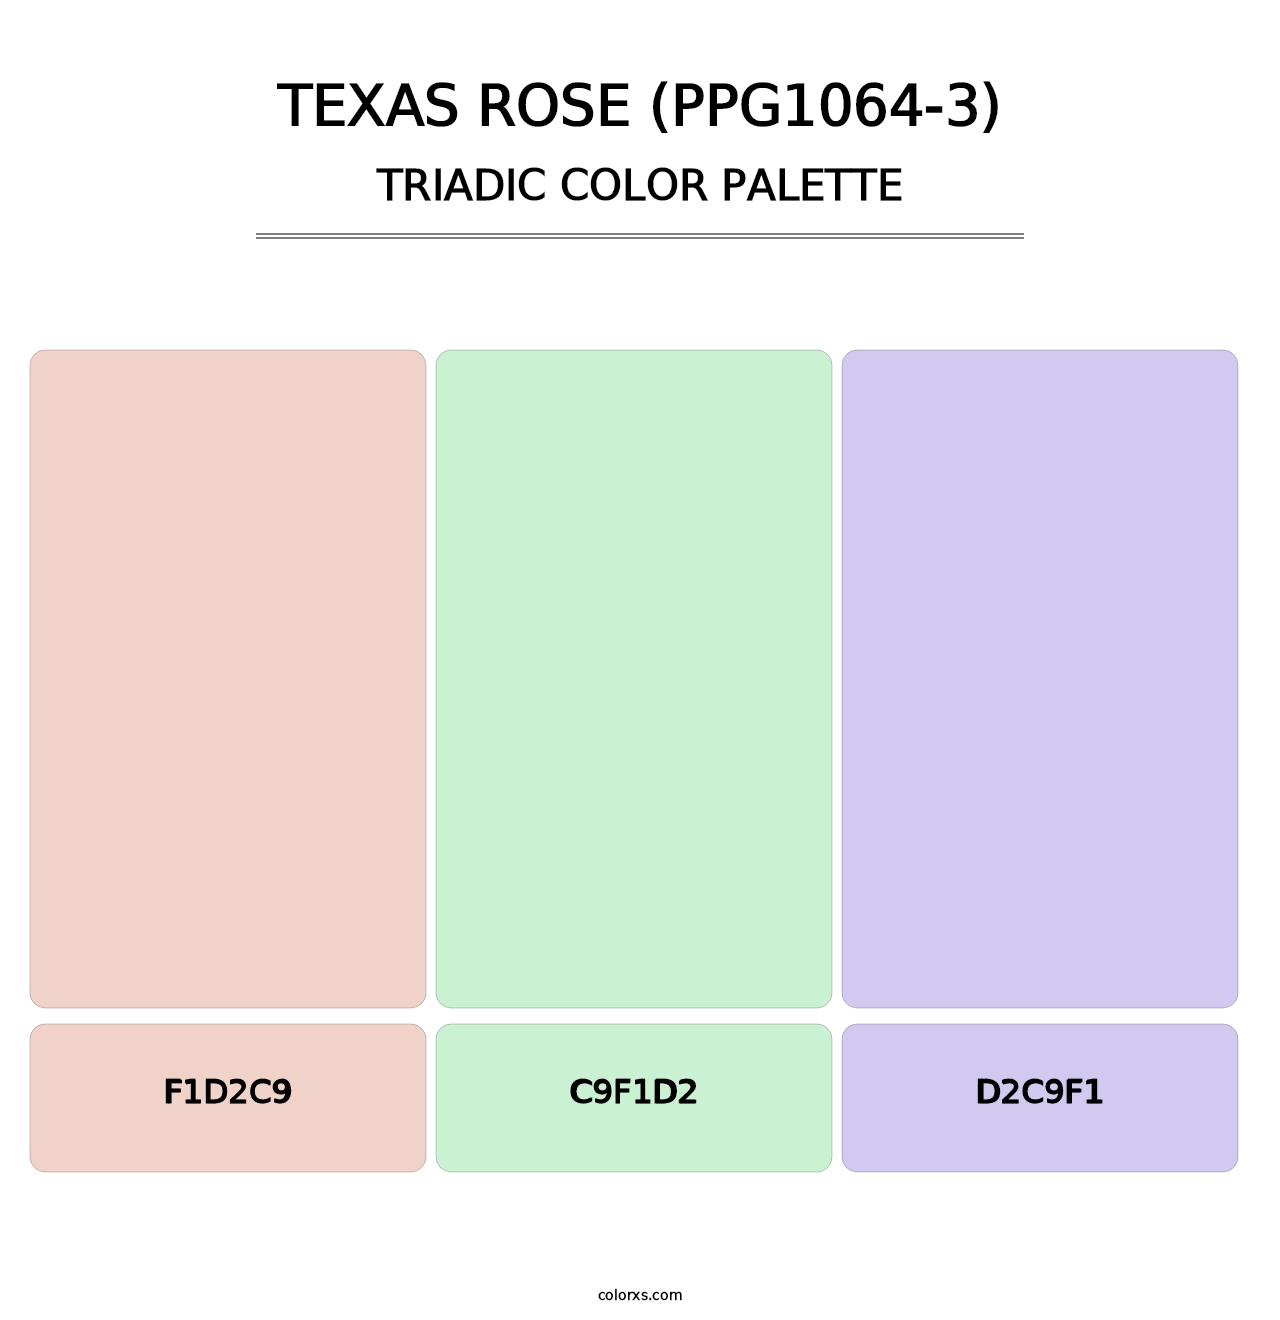 Texas Rose (PPG1064-3) - Triadic Color Palette